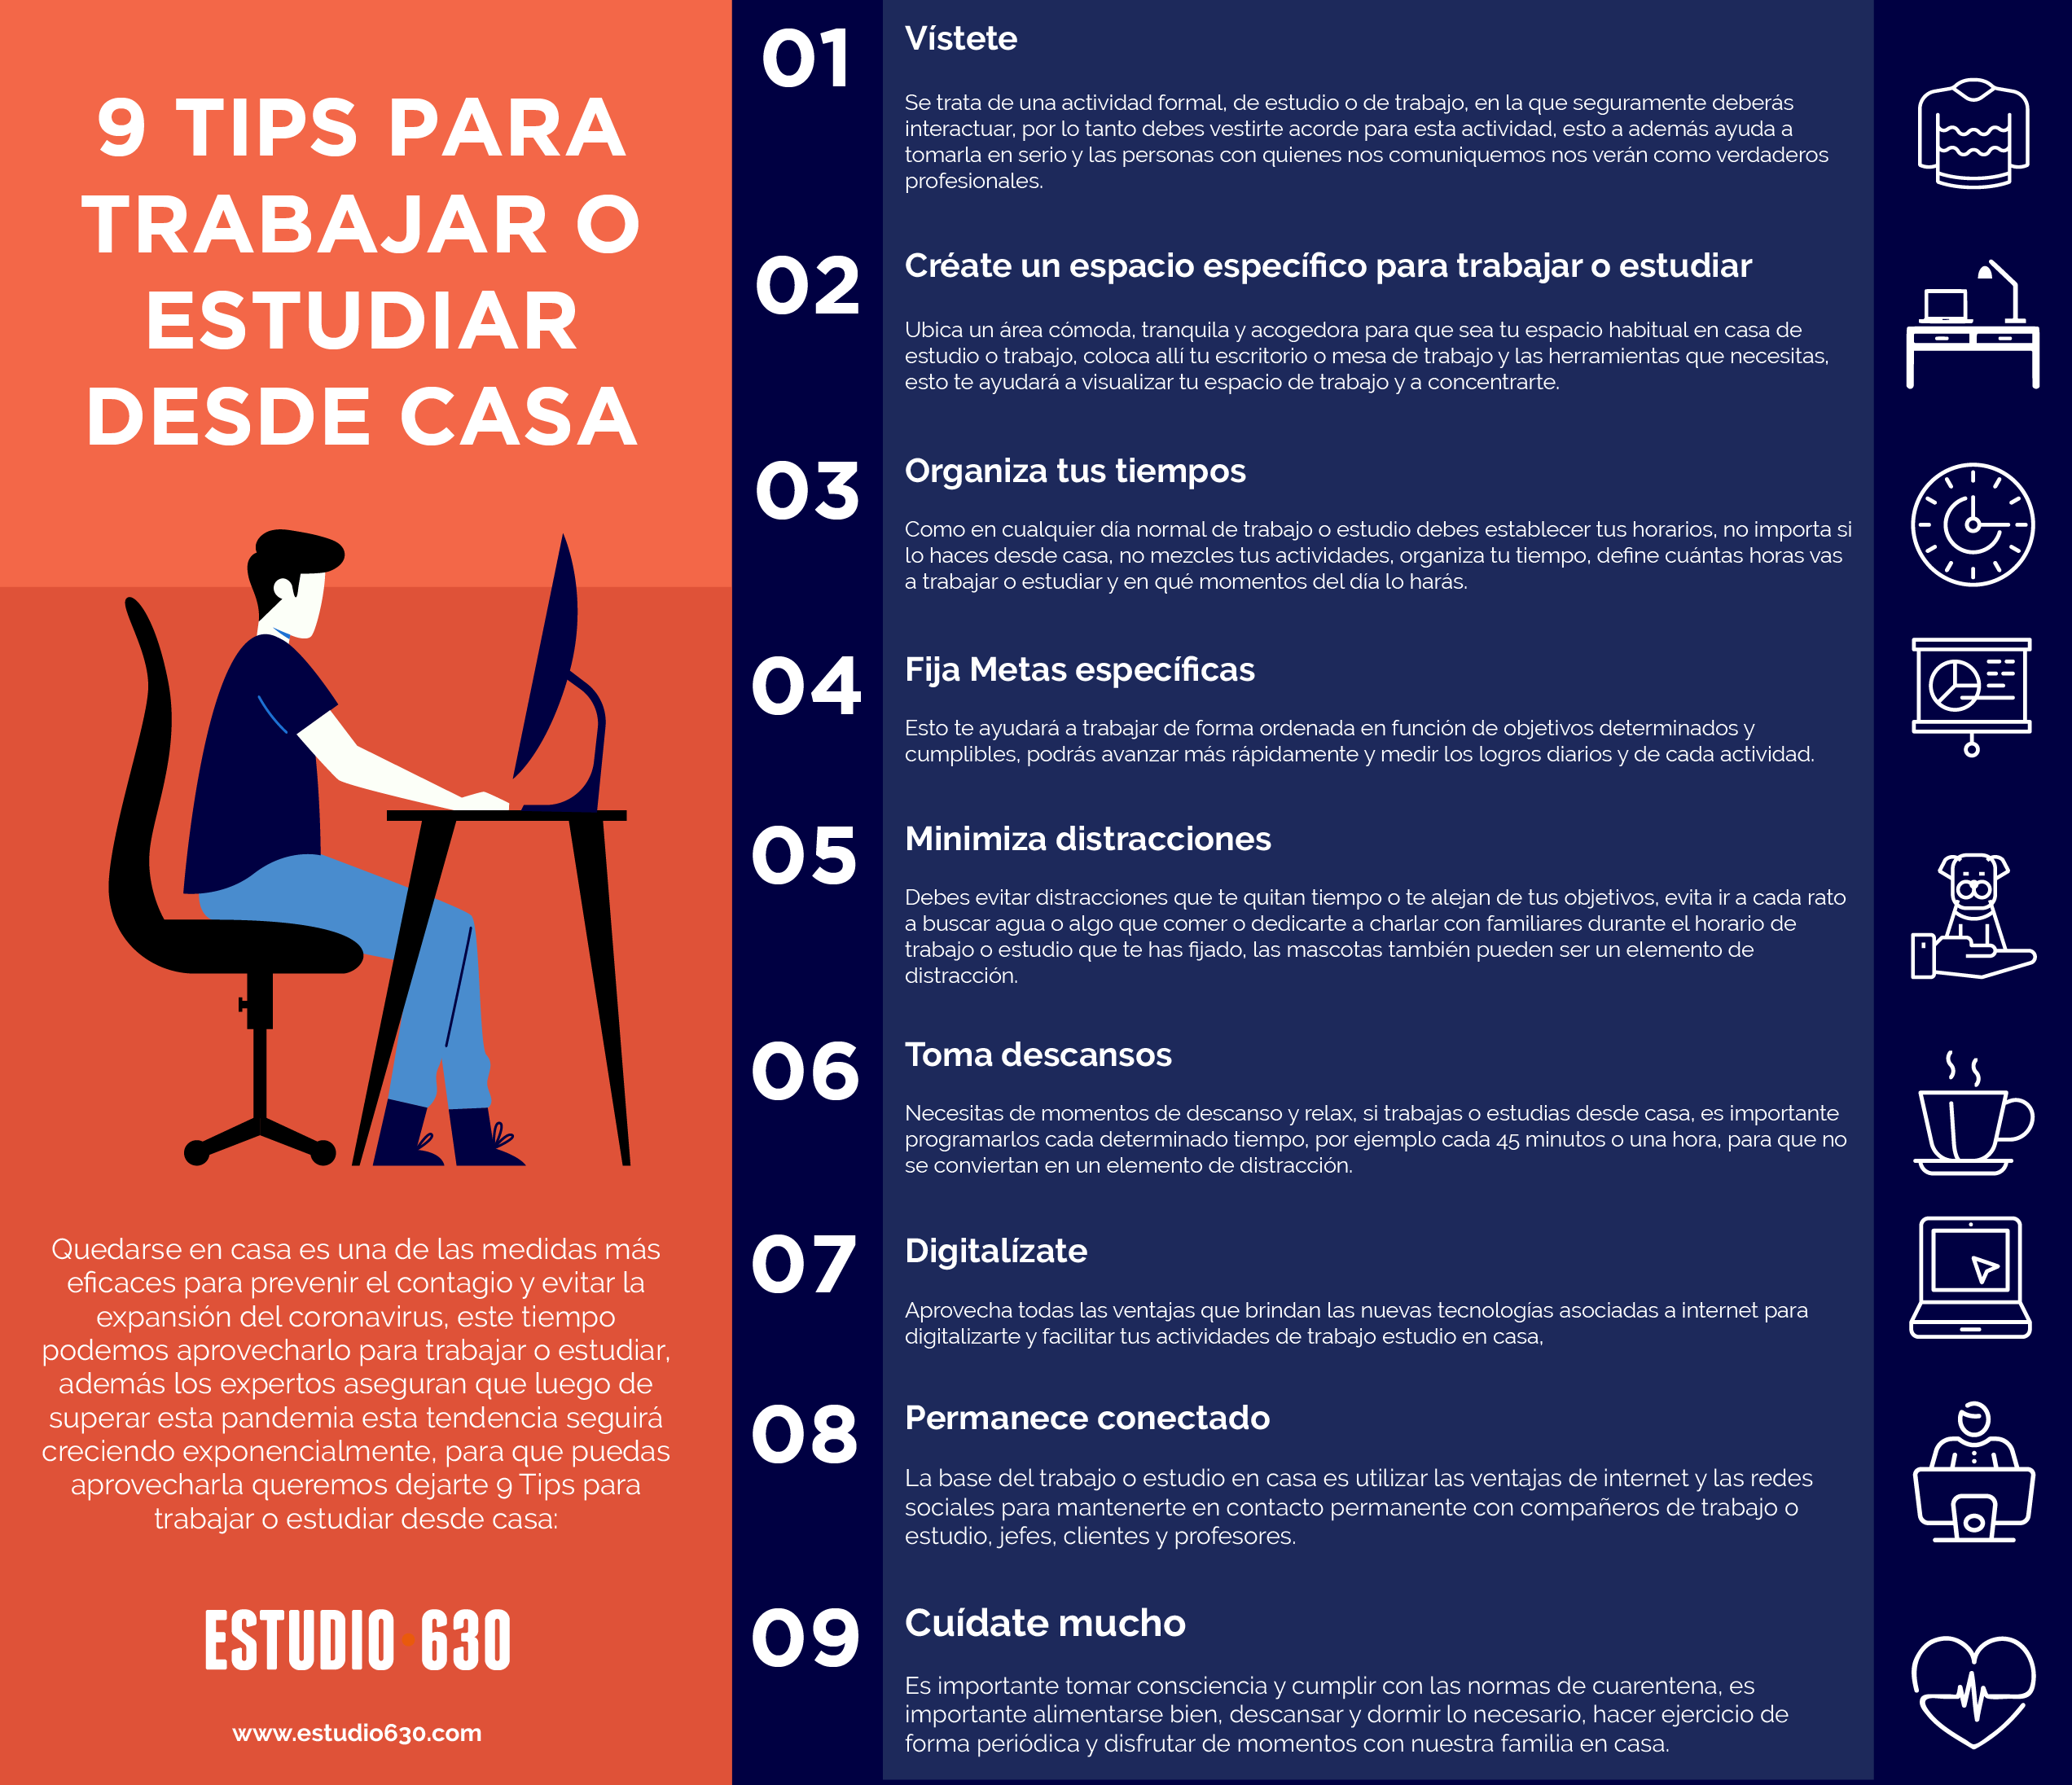 trabajar o estudiar desde casa - infografias marketing 04 - 9 Tips para trabajar o estudiar desde casa (infografía)